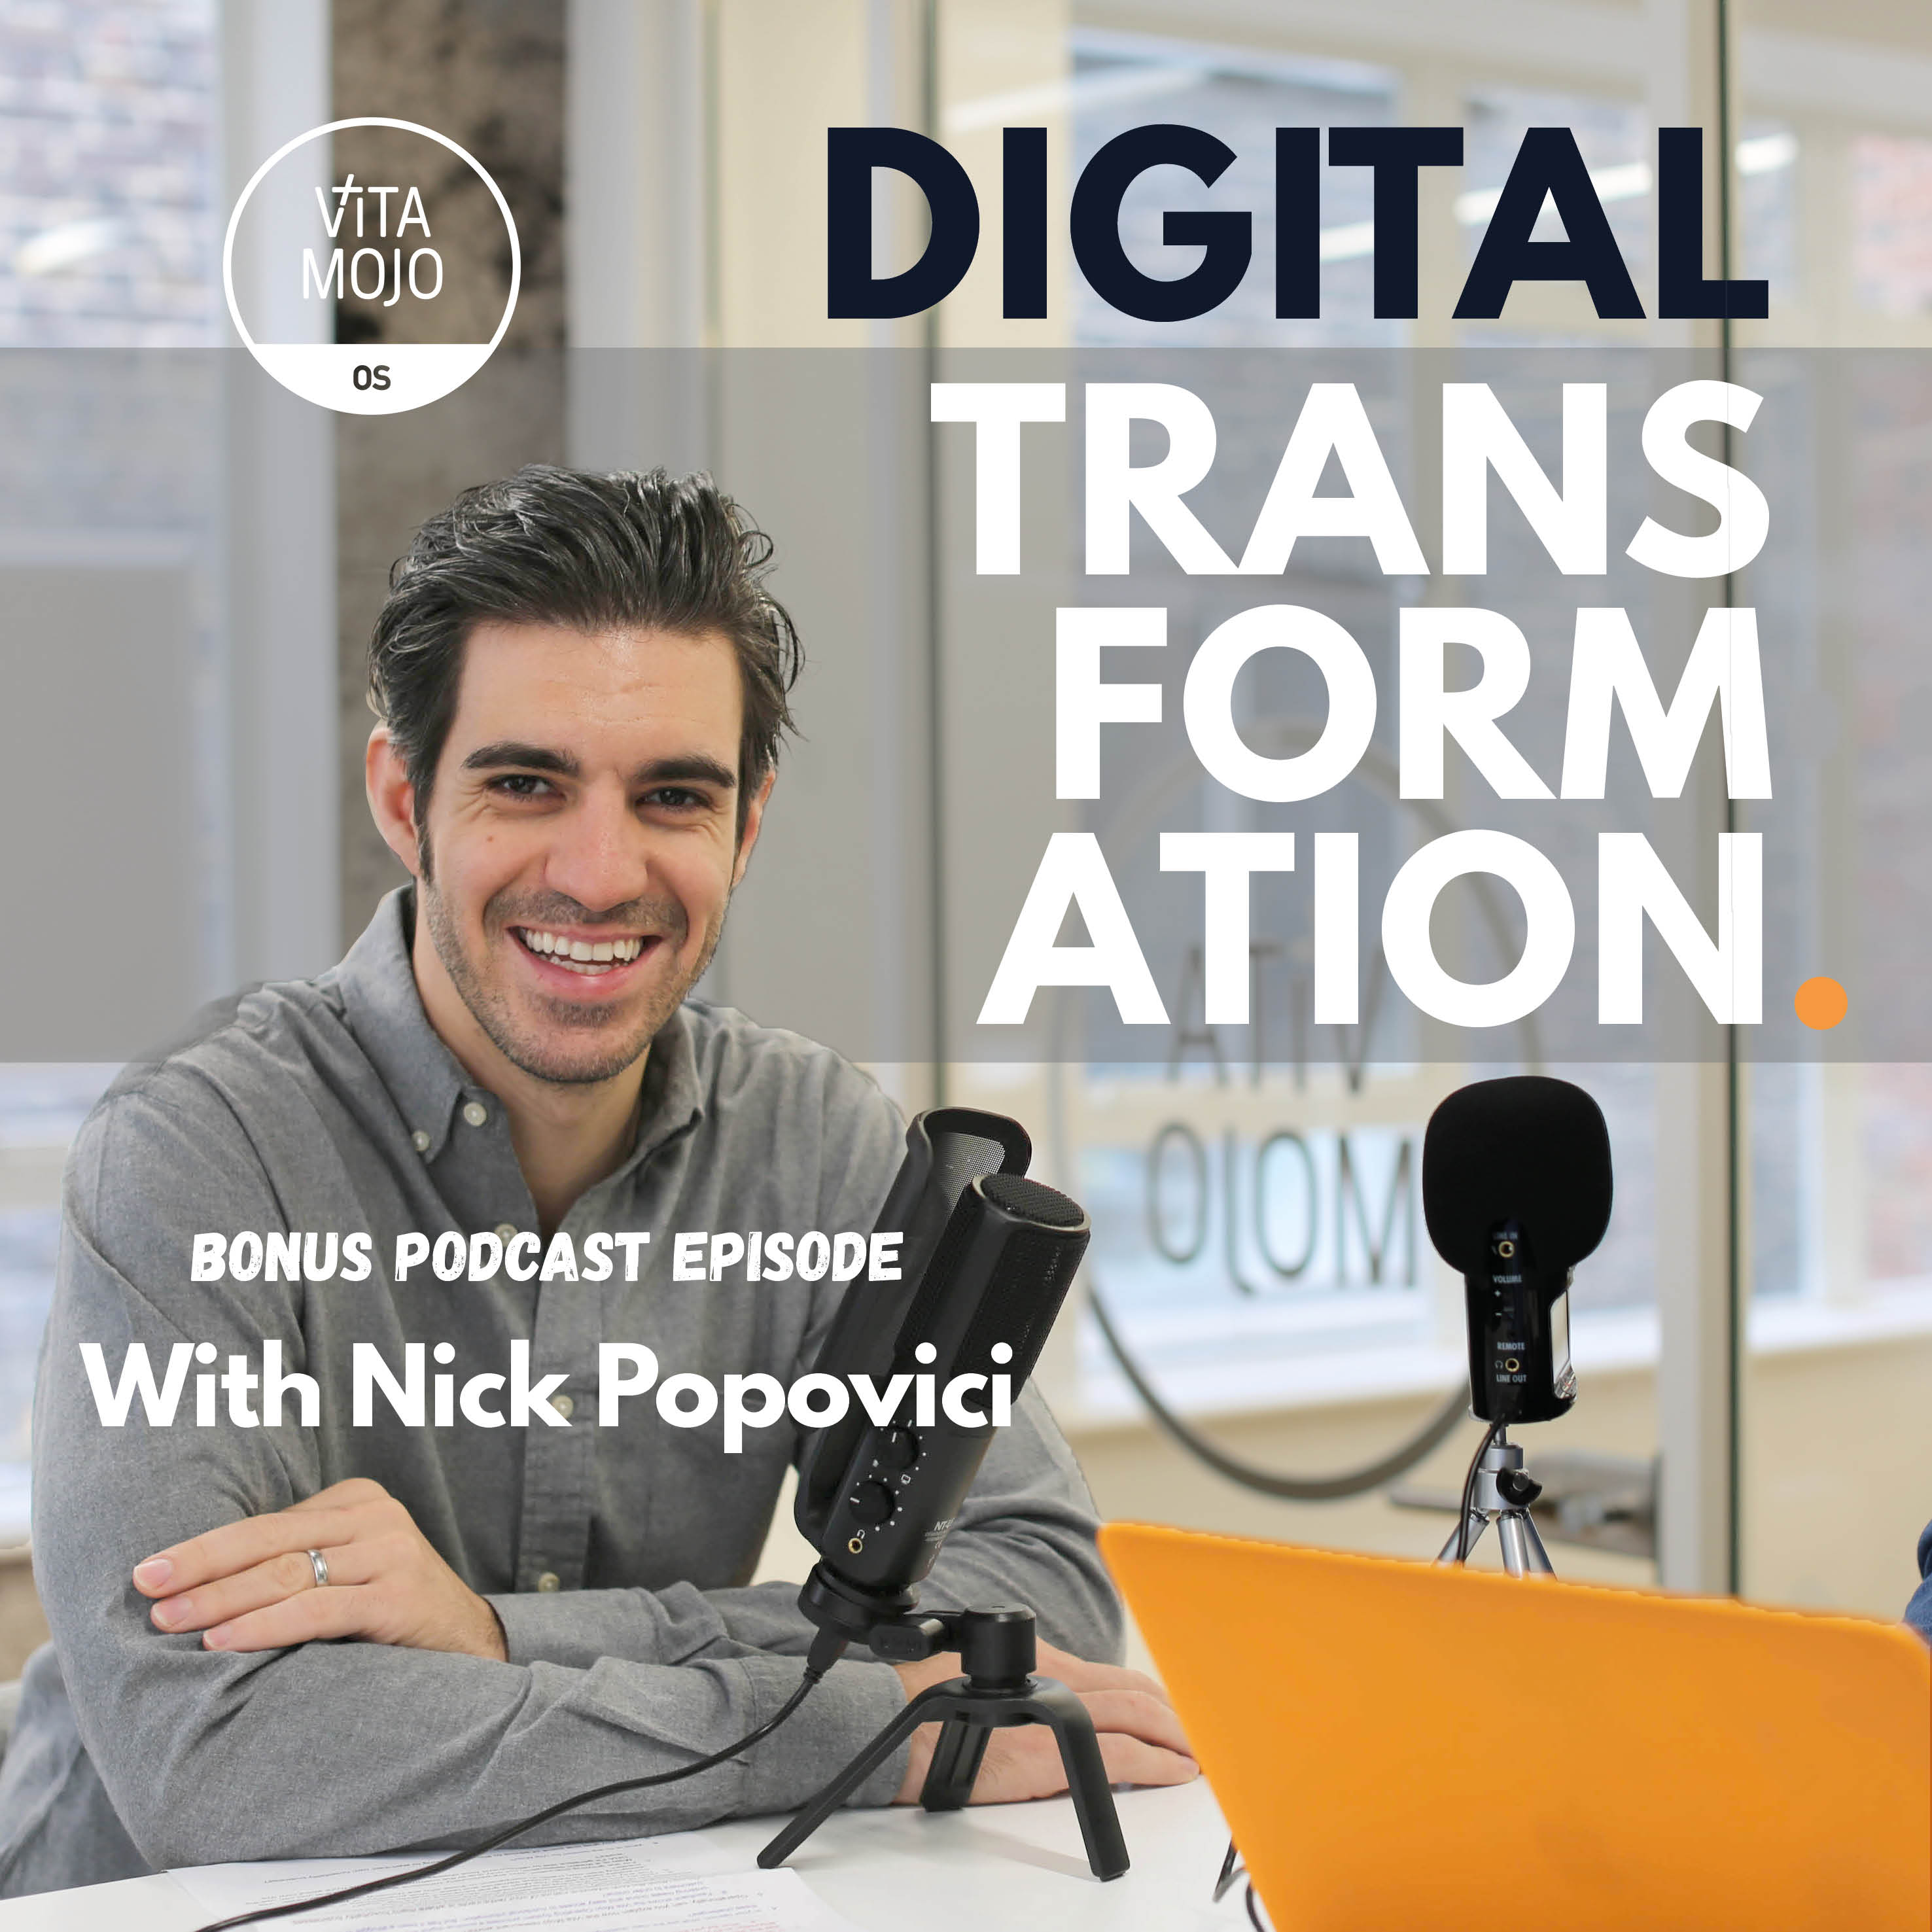 Digital Transformation with Nick Popovici Co-Founder and CEO Vita Mojo Image